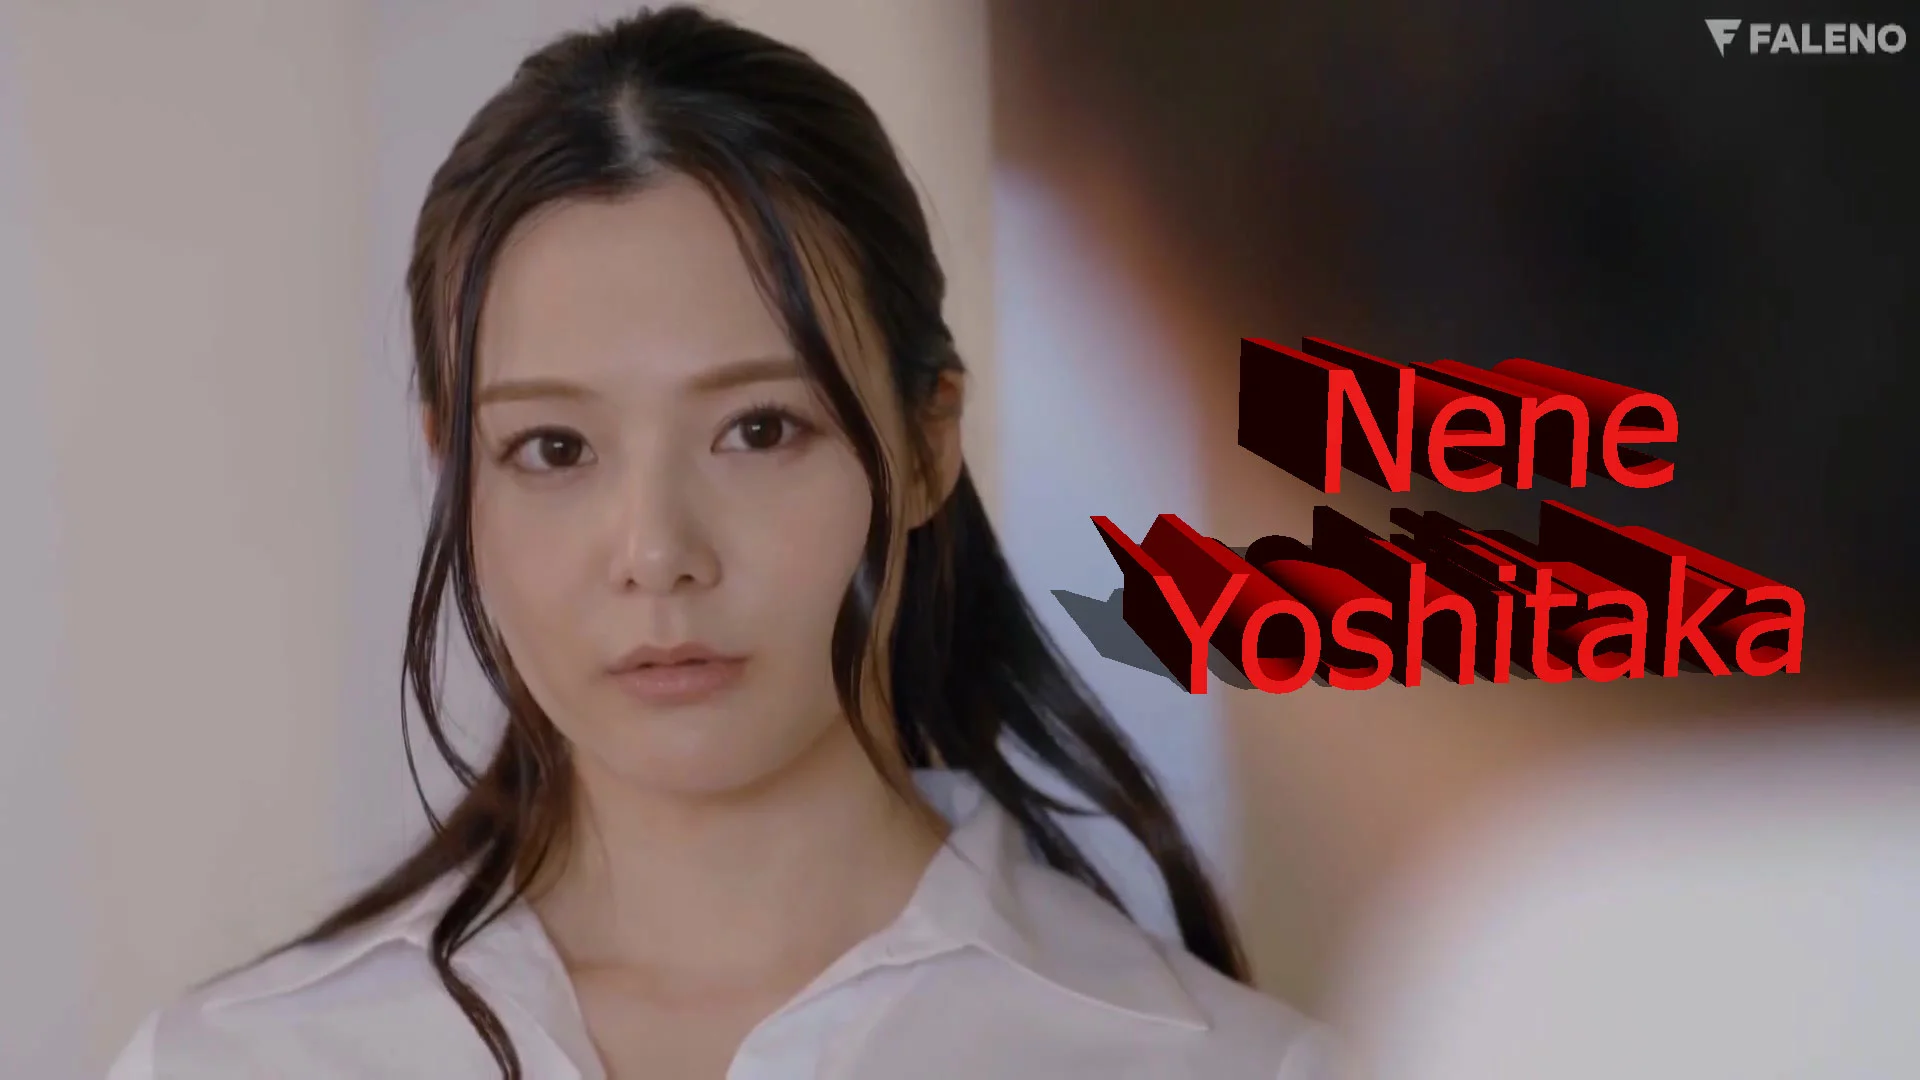 Yoshitaka Nene Xxx - On That Very Day, After The Graduation Ceremony â€¦ I Confronted My Female  Teacher - Nene Yoshitaka on Vimeo